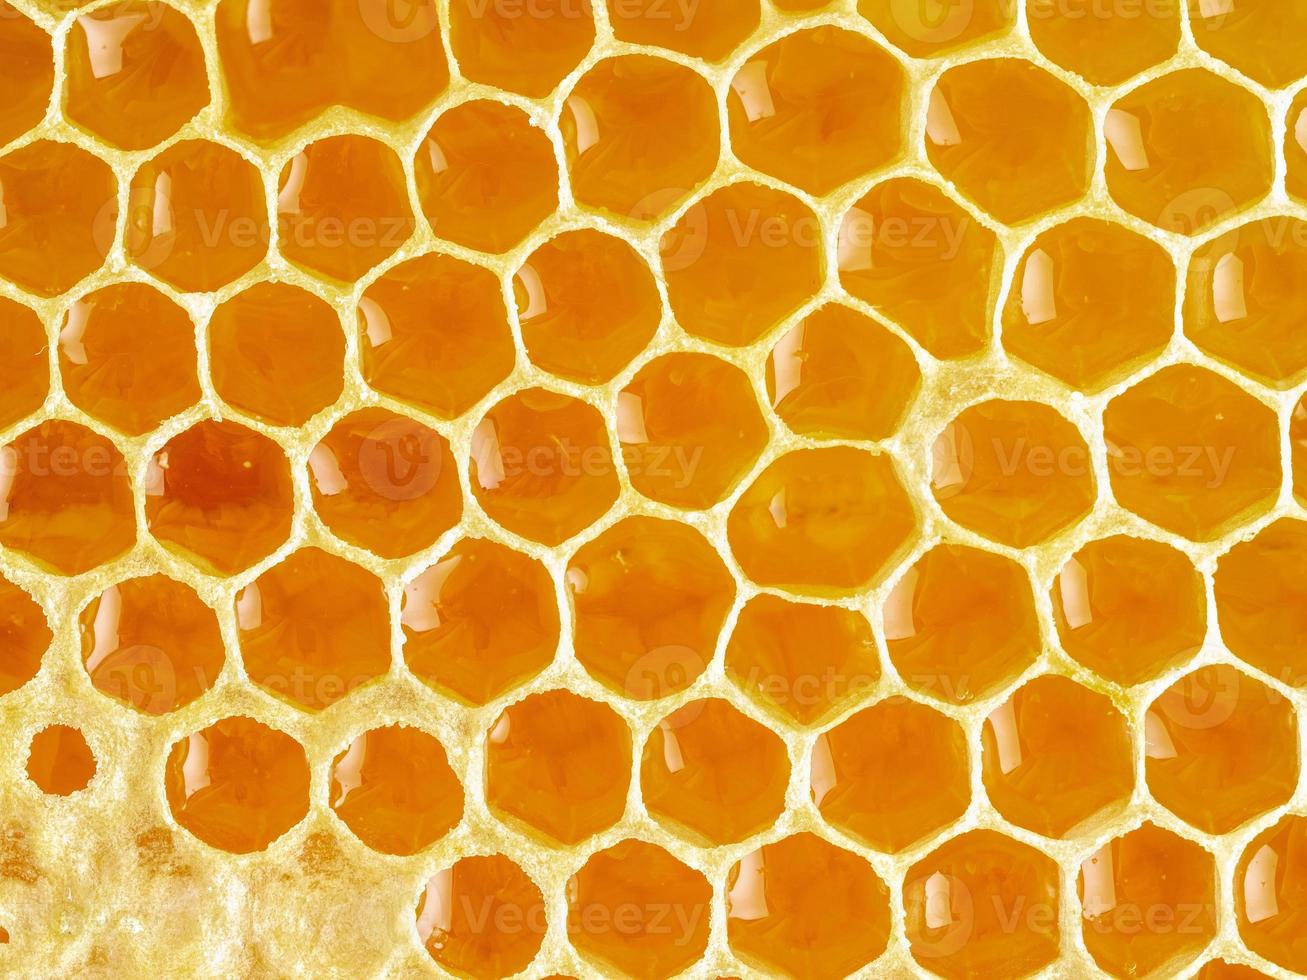 primo piano a nido d'ape d'ape, miele dolce gocciolante filante fresco, sfondo macro foto